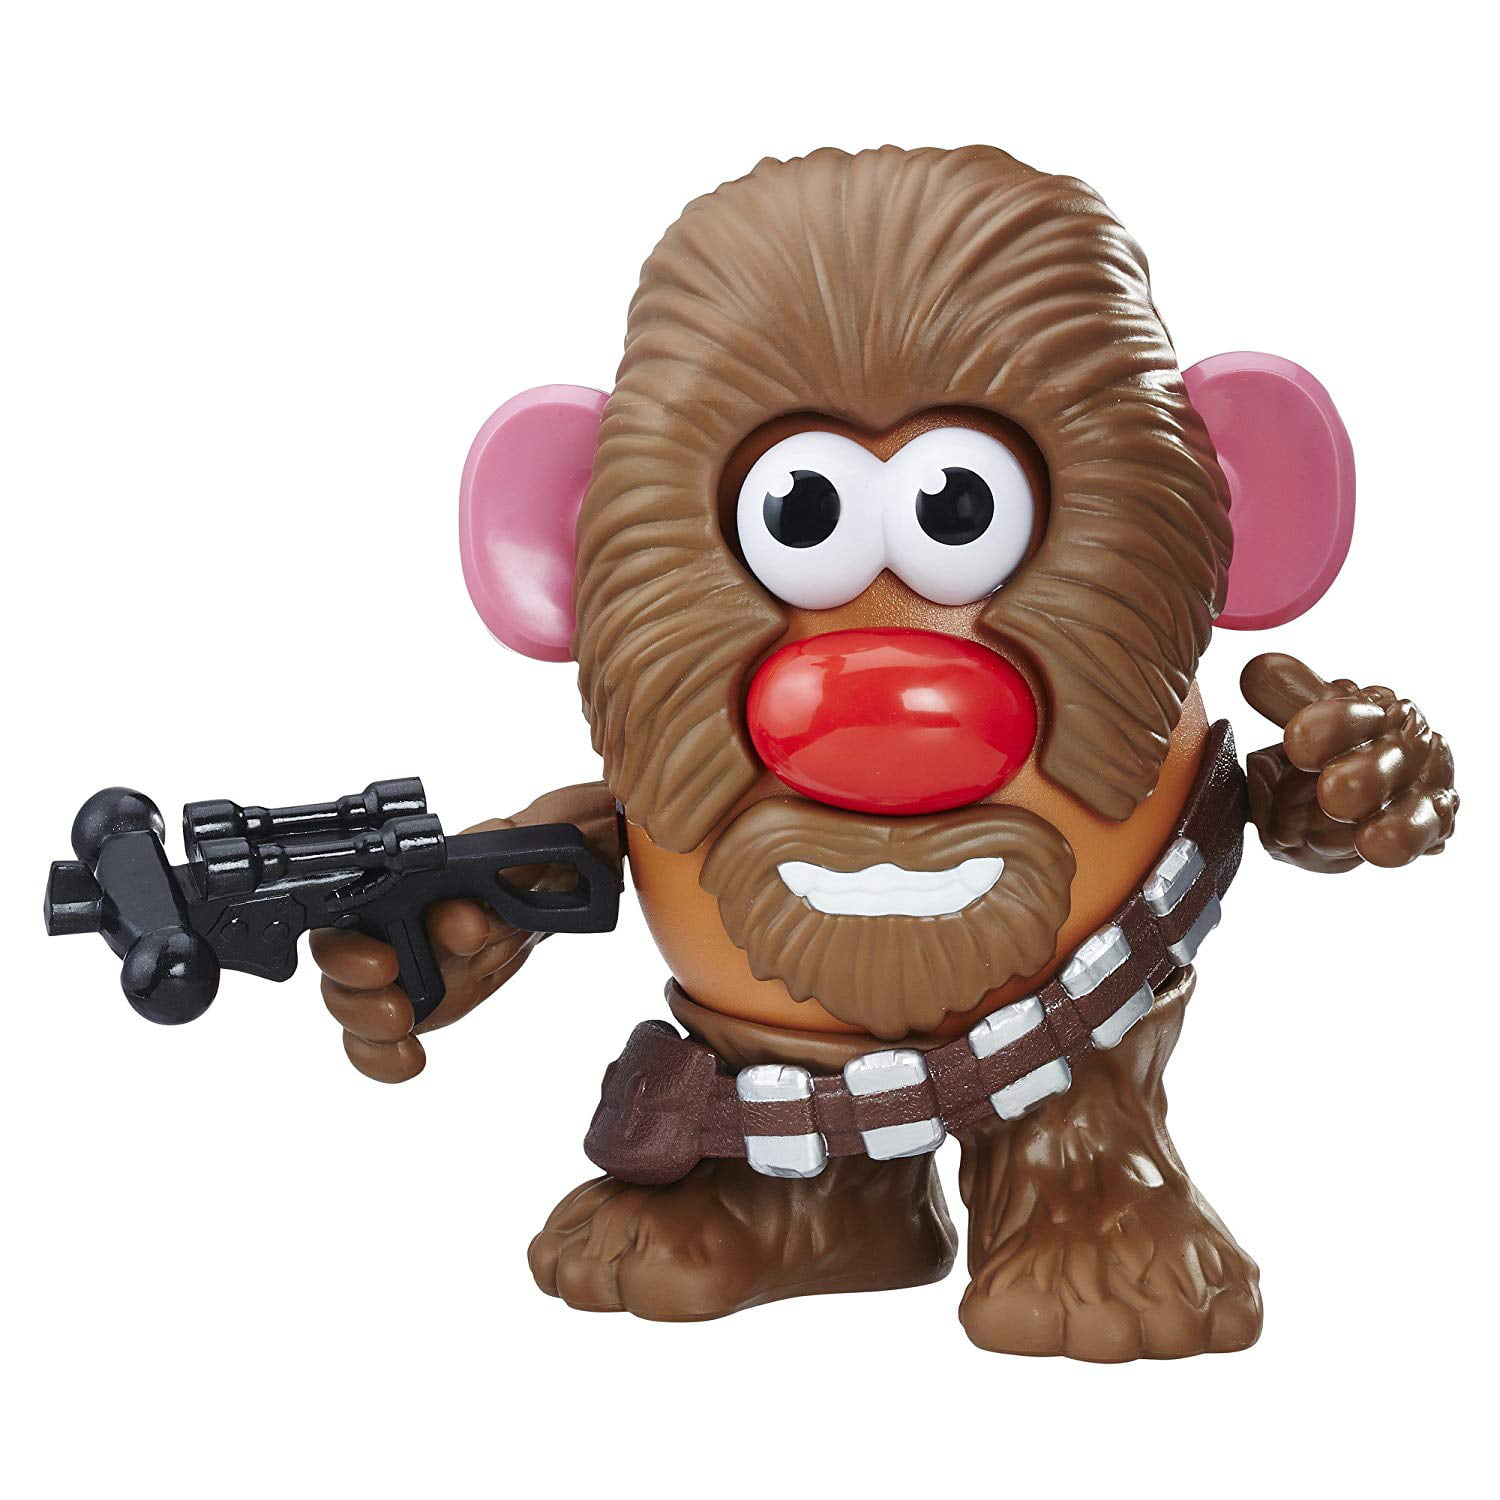 Playskool Mr Potato Head Chewbacca Figure for sale online C0188 